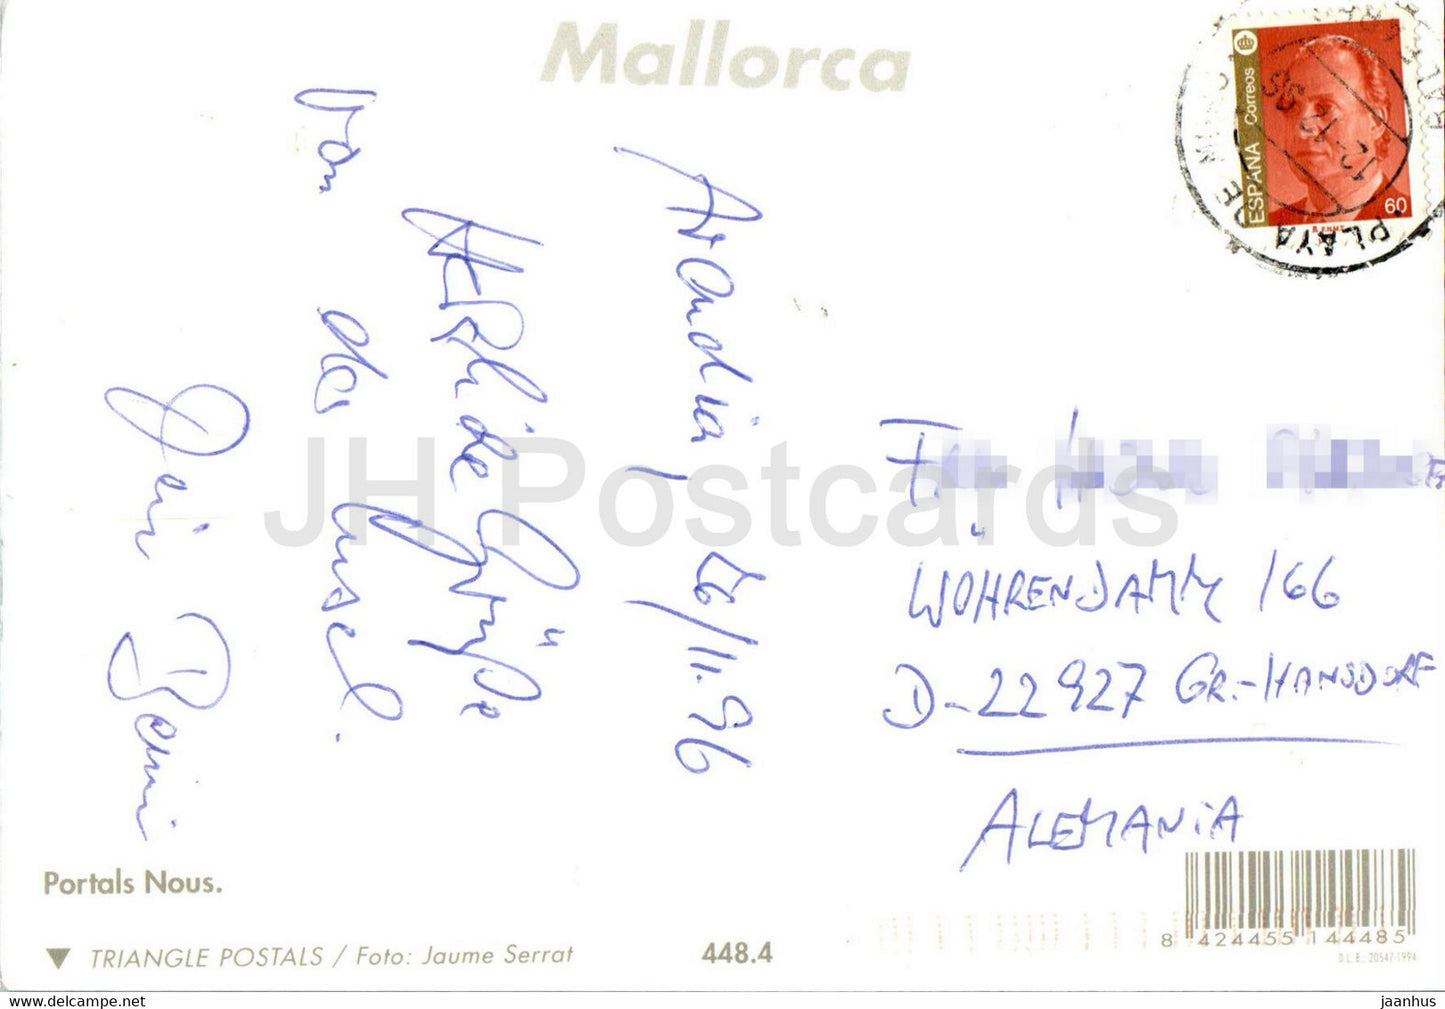 Portals Nous – Mallorca – 1996 – Spanien – gebraucht